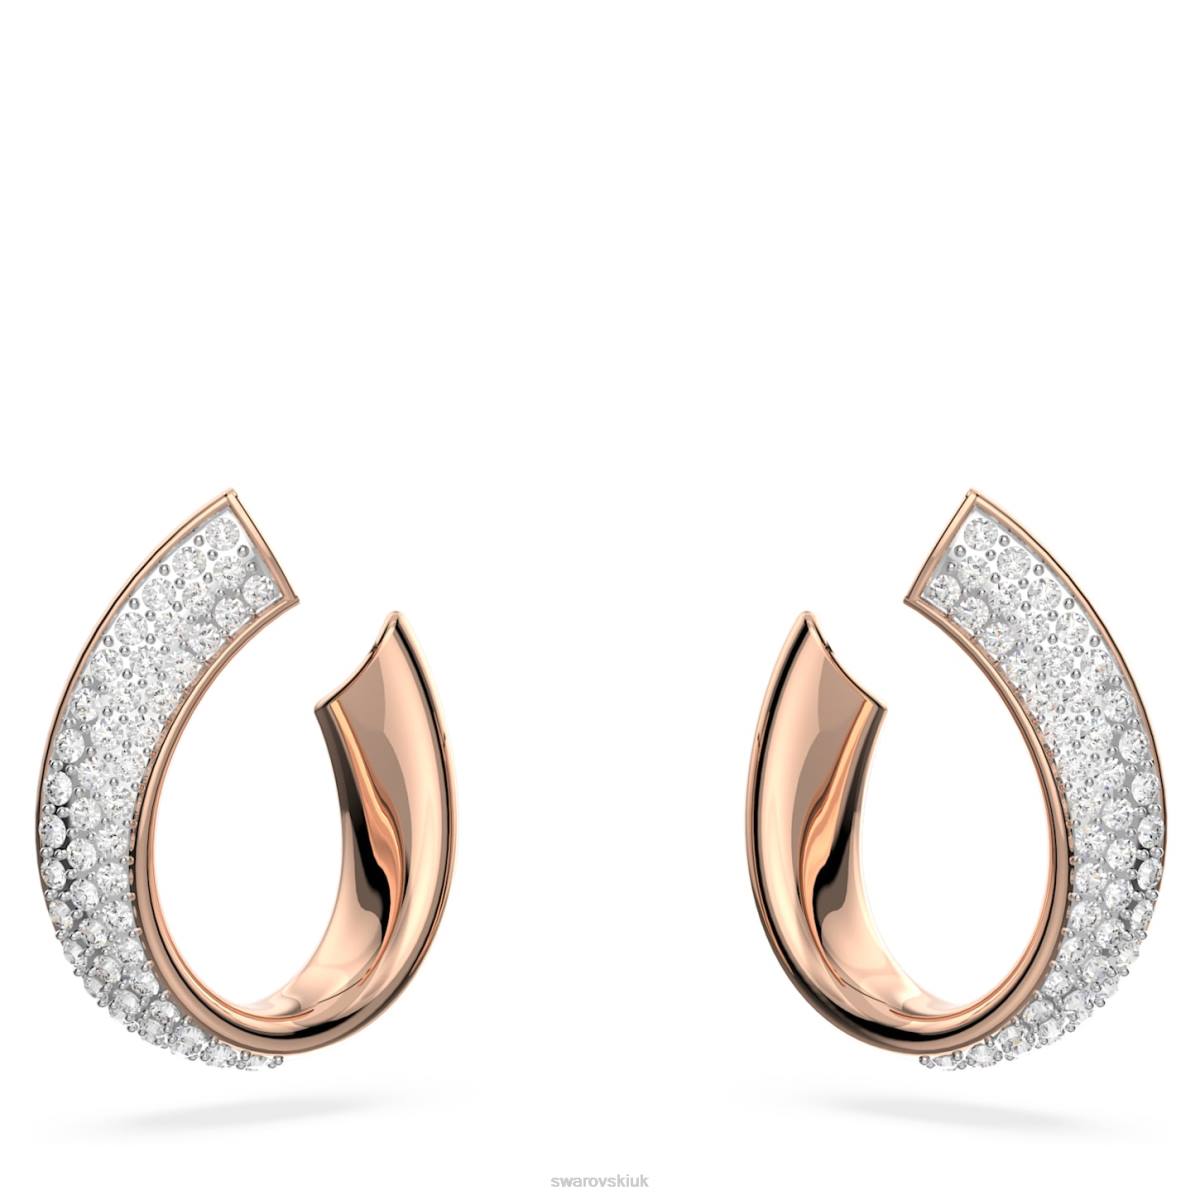 Jewelry Swarovski Exist hoop earrings White, Rose gold-tone plated 48JX883